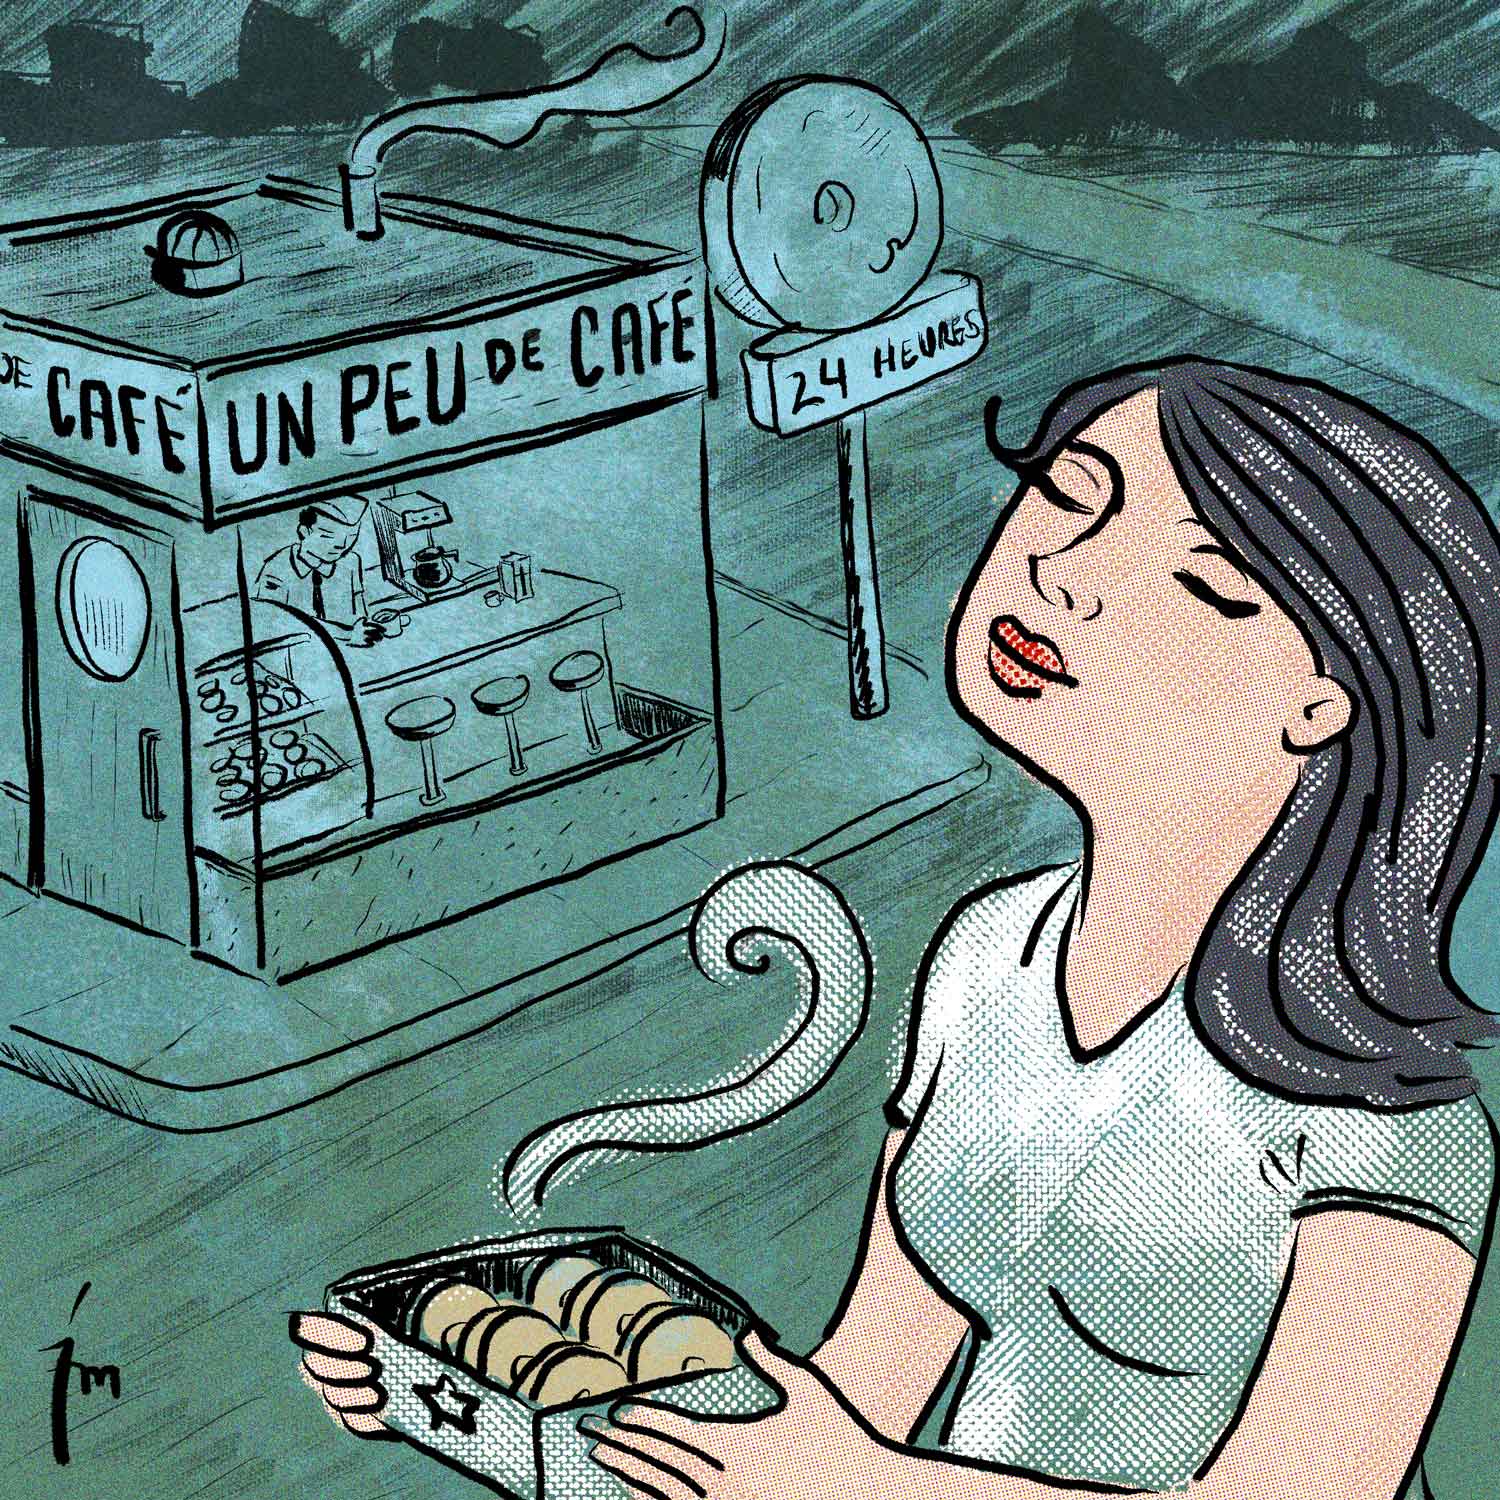 illustration titled: Un Peu De Cafe